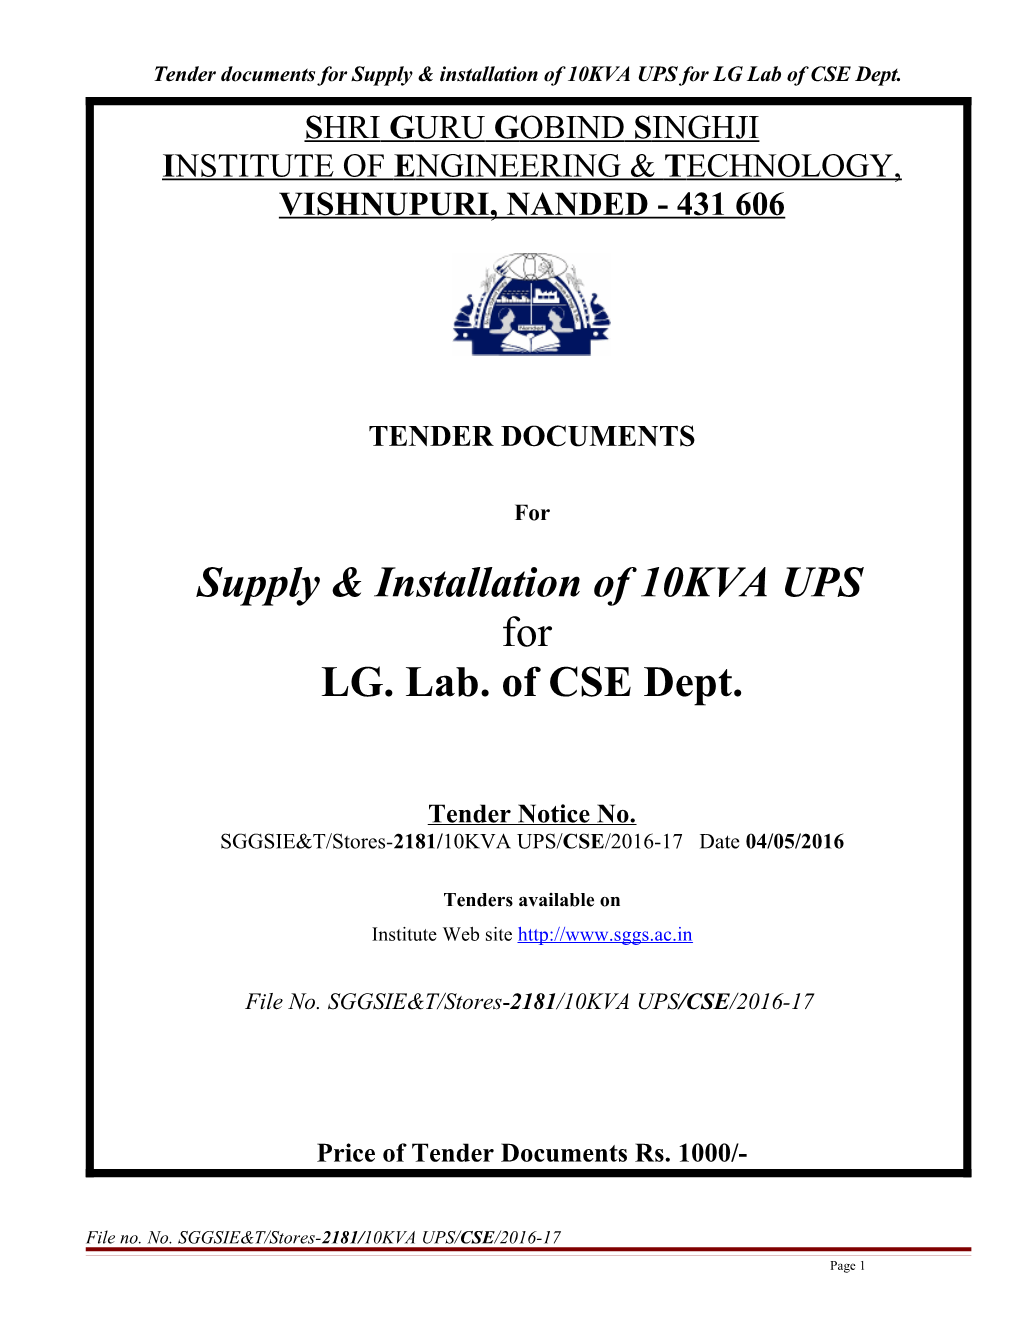 Tender Documents for Supply & Installation of 10KVA Upsfor LG Lab of CSE Dept